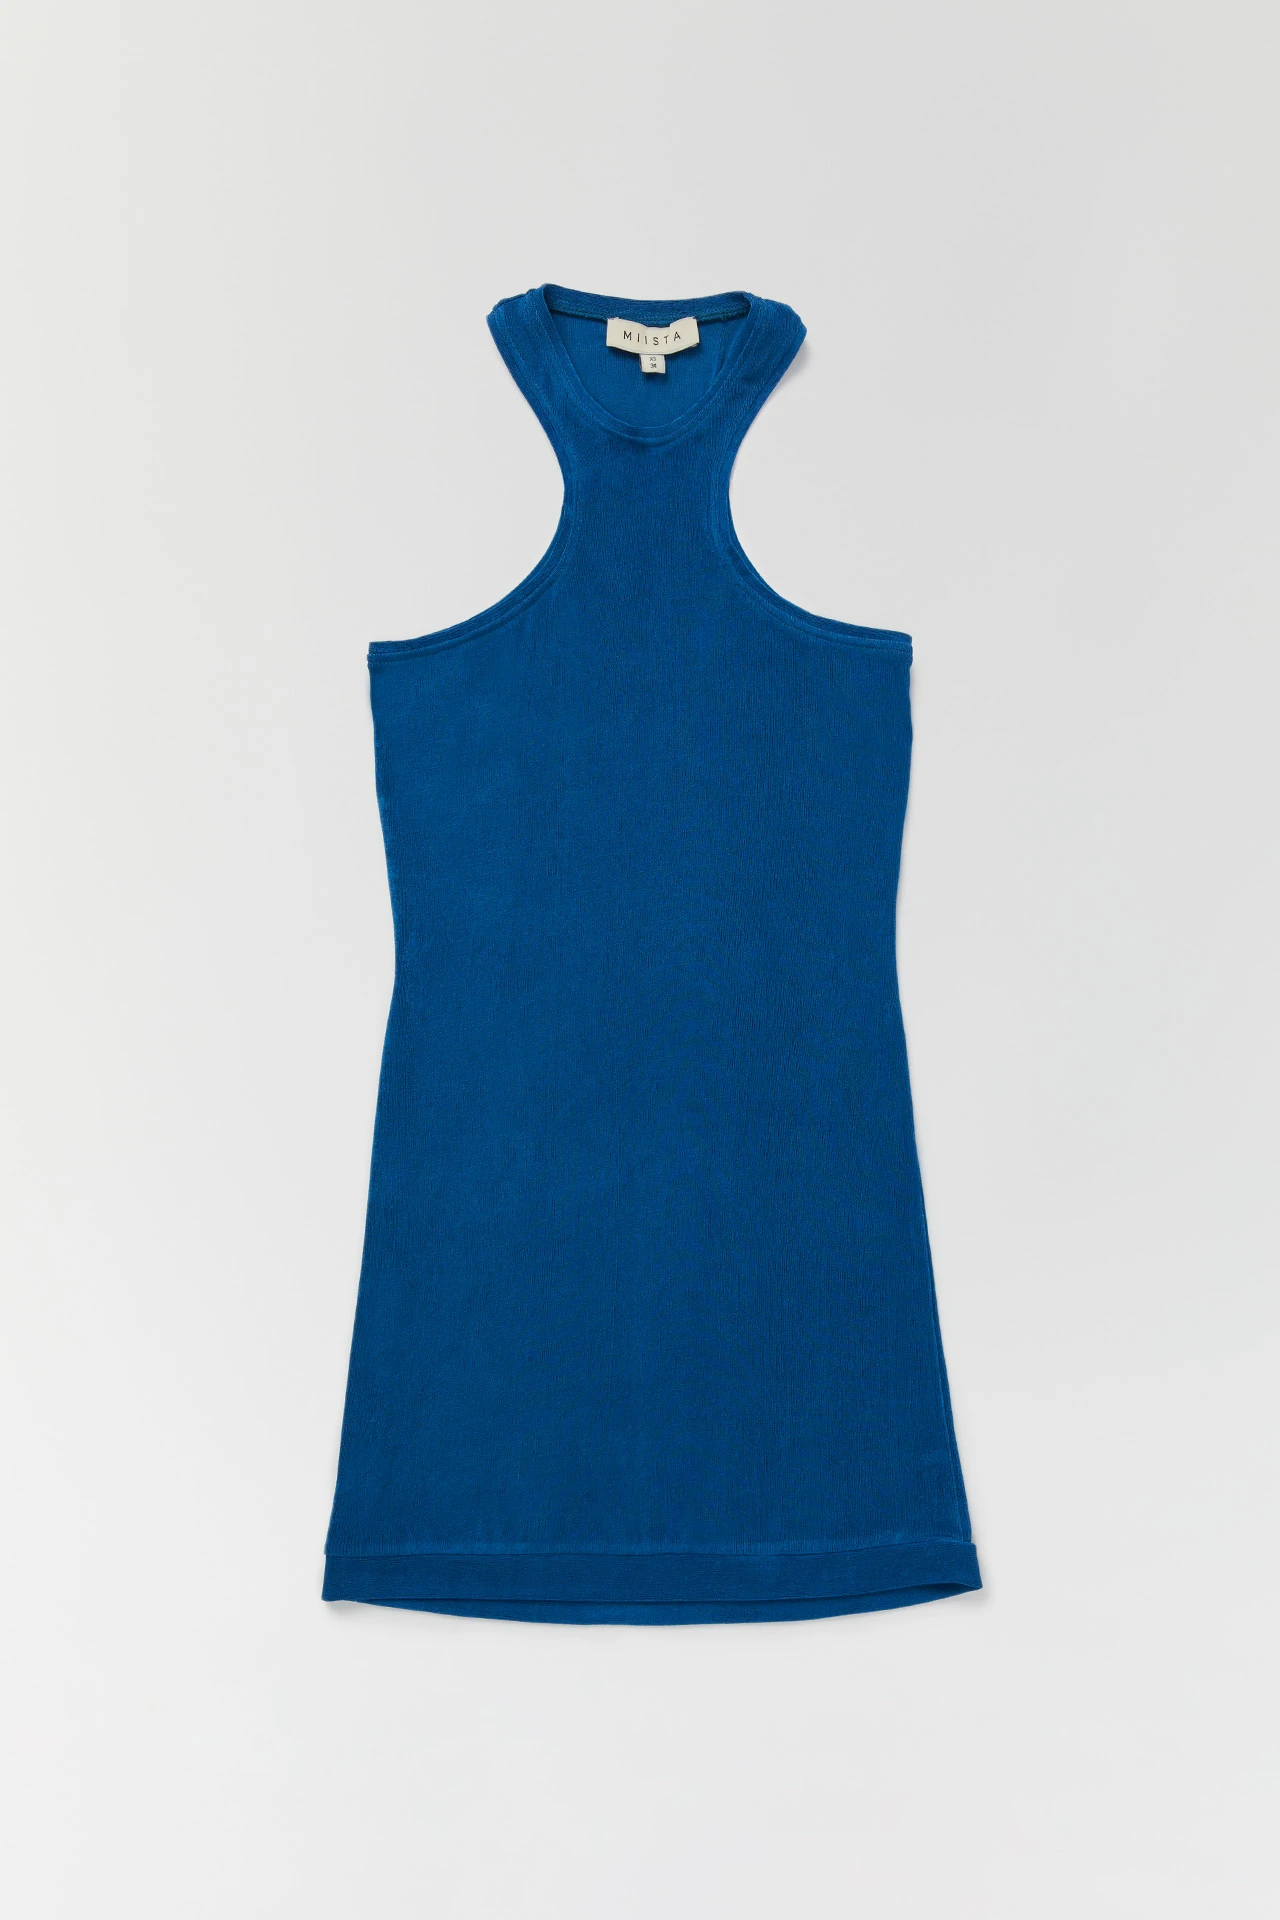 Miista-jane-blue-dress-01